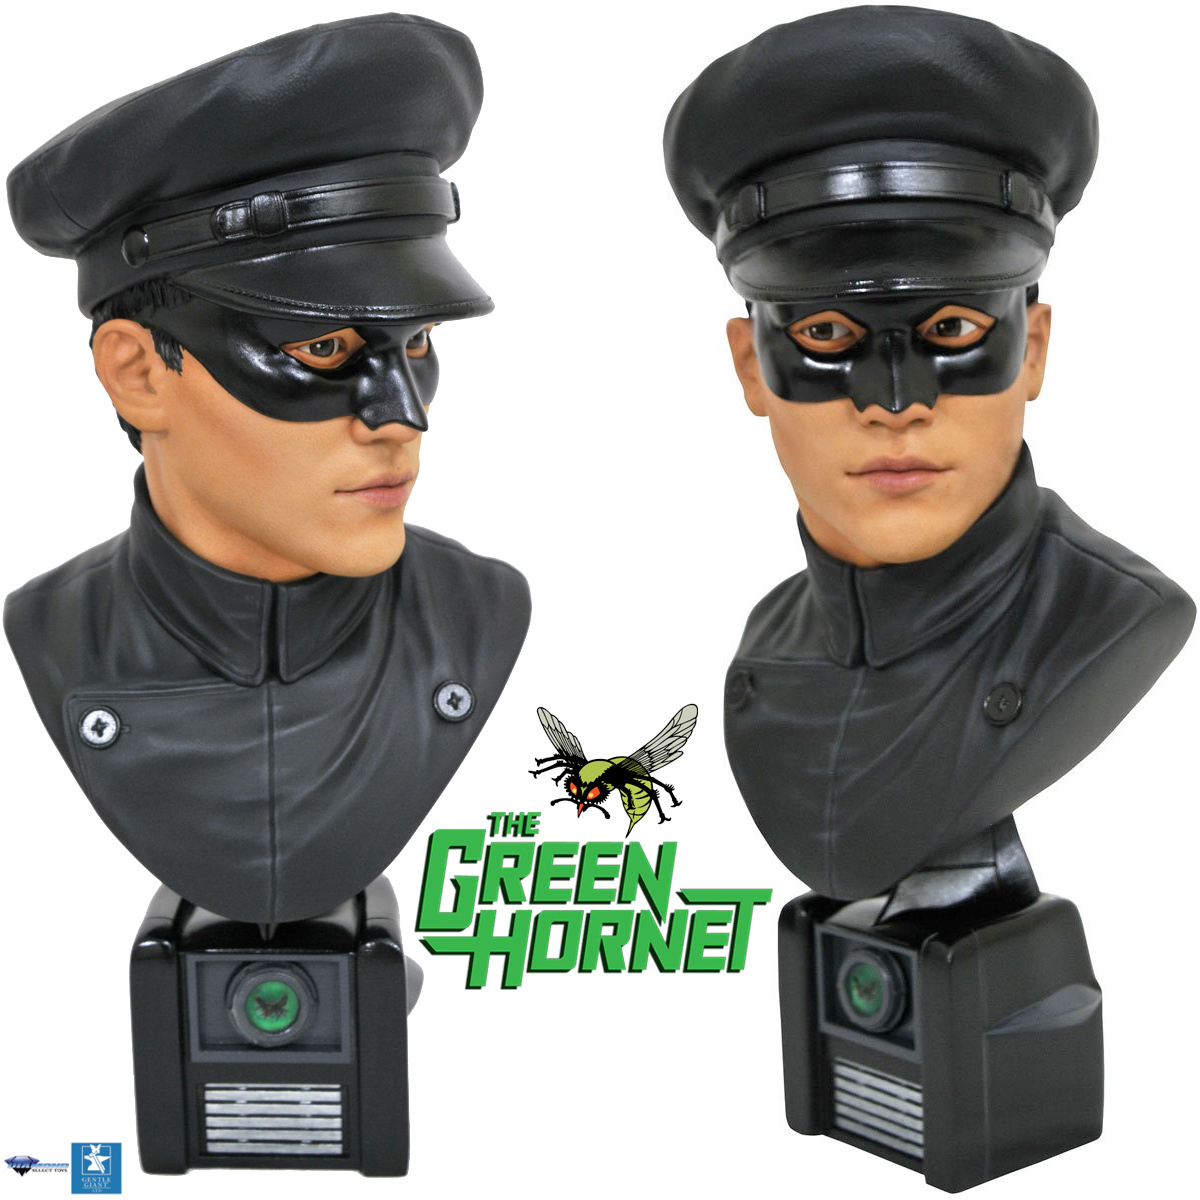 Busto Kato (Bruce Lee) Legends in 3D da Série Besouro Verde (Green Hornet) em Escala 1:2